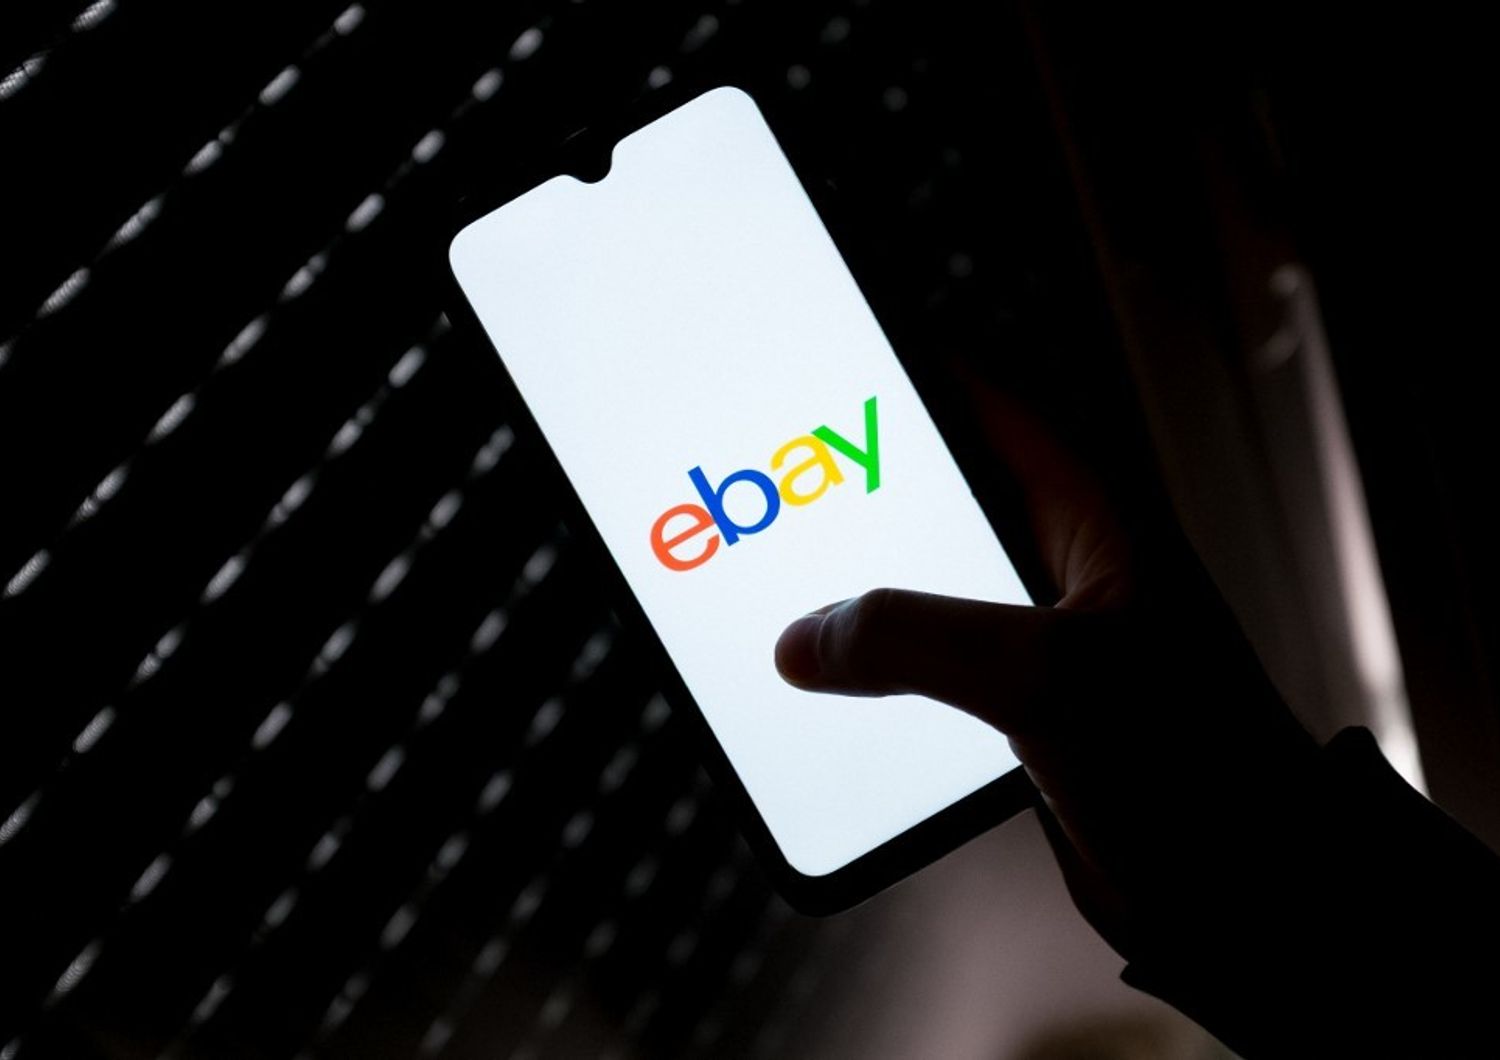 dati militari usa sensibili acquistati ebay